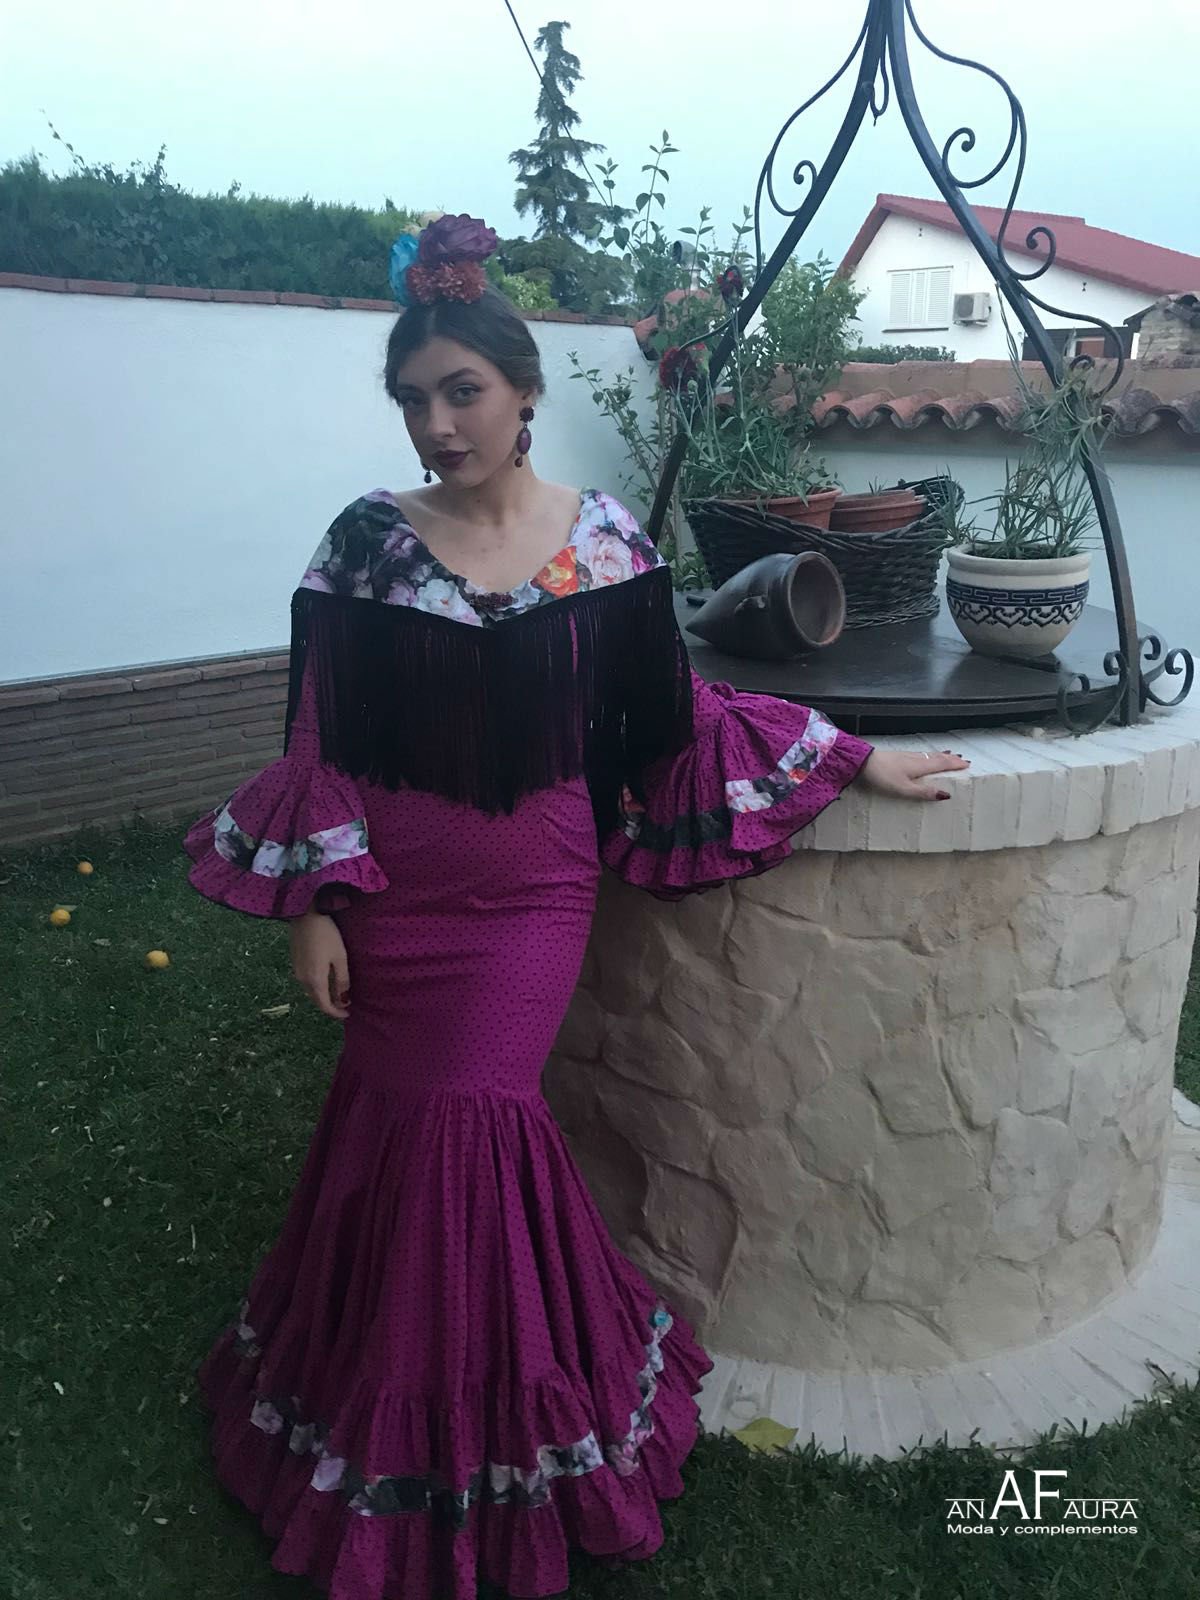 Ana Faura on Twitter: "Otra clienta más vestida Ana Faura. de abril 2018 #Flamenca #AccesoriosFlamenca #AccesoriosMujer #ComplementosParaMujer #FeriaDeAbril #Complementos https://t.co/lOKwekbgK8" / Twitter